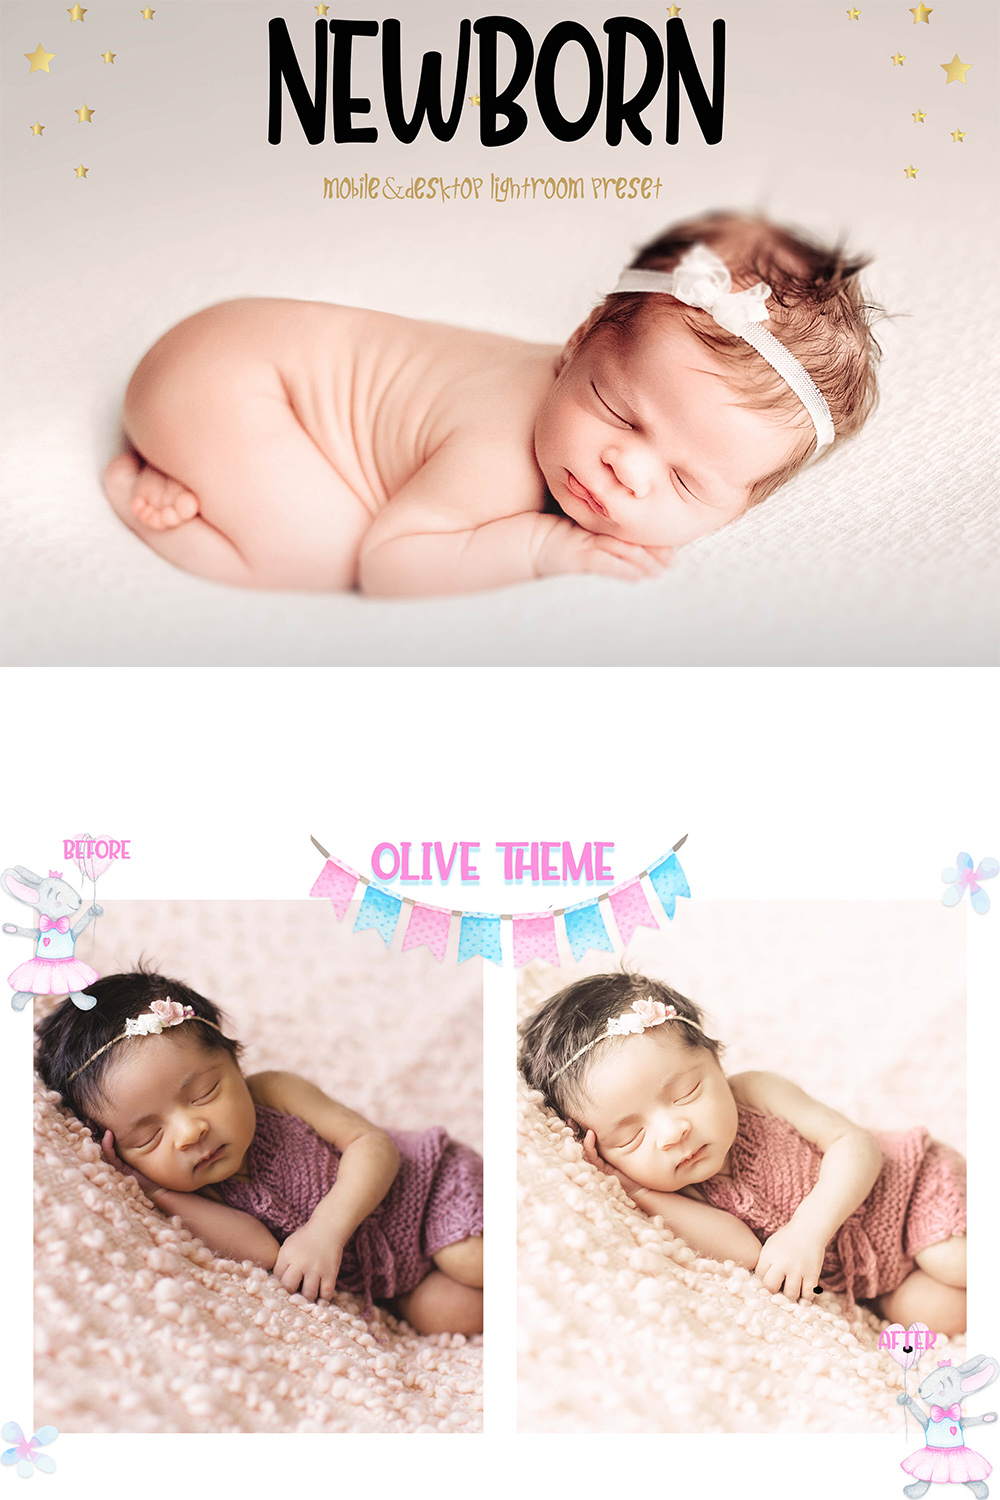 10 Newborn Mobile & Desktop Lightroom Presets, baby skin LR preset, Portrait Bright Filter, DNG Lifestyle Best Photographer Instagram Theme pinterest preview image.